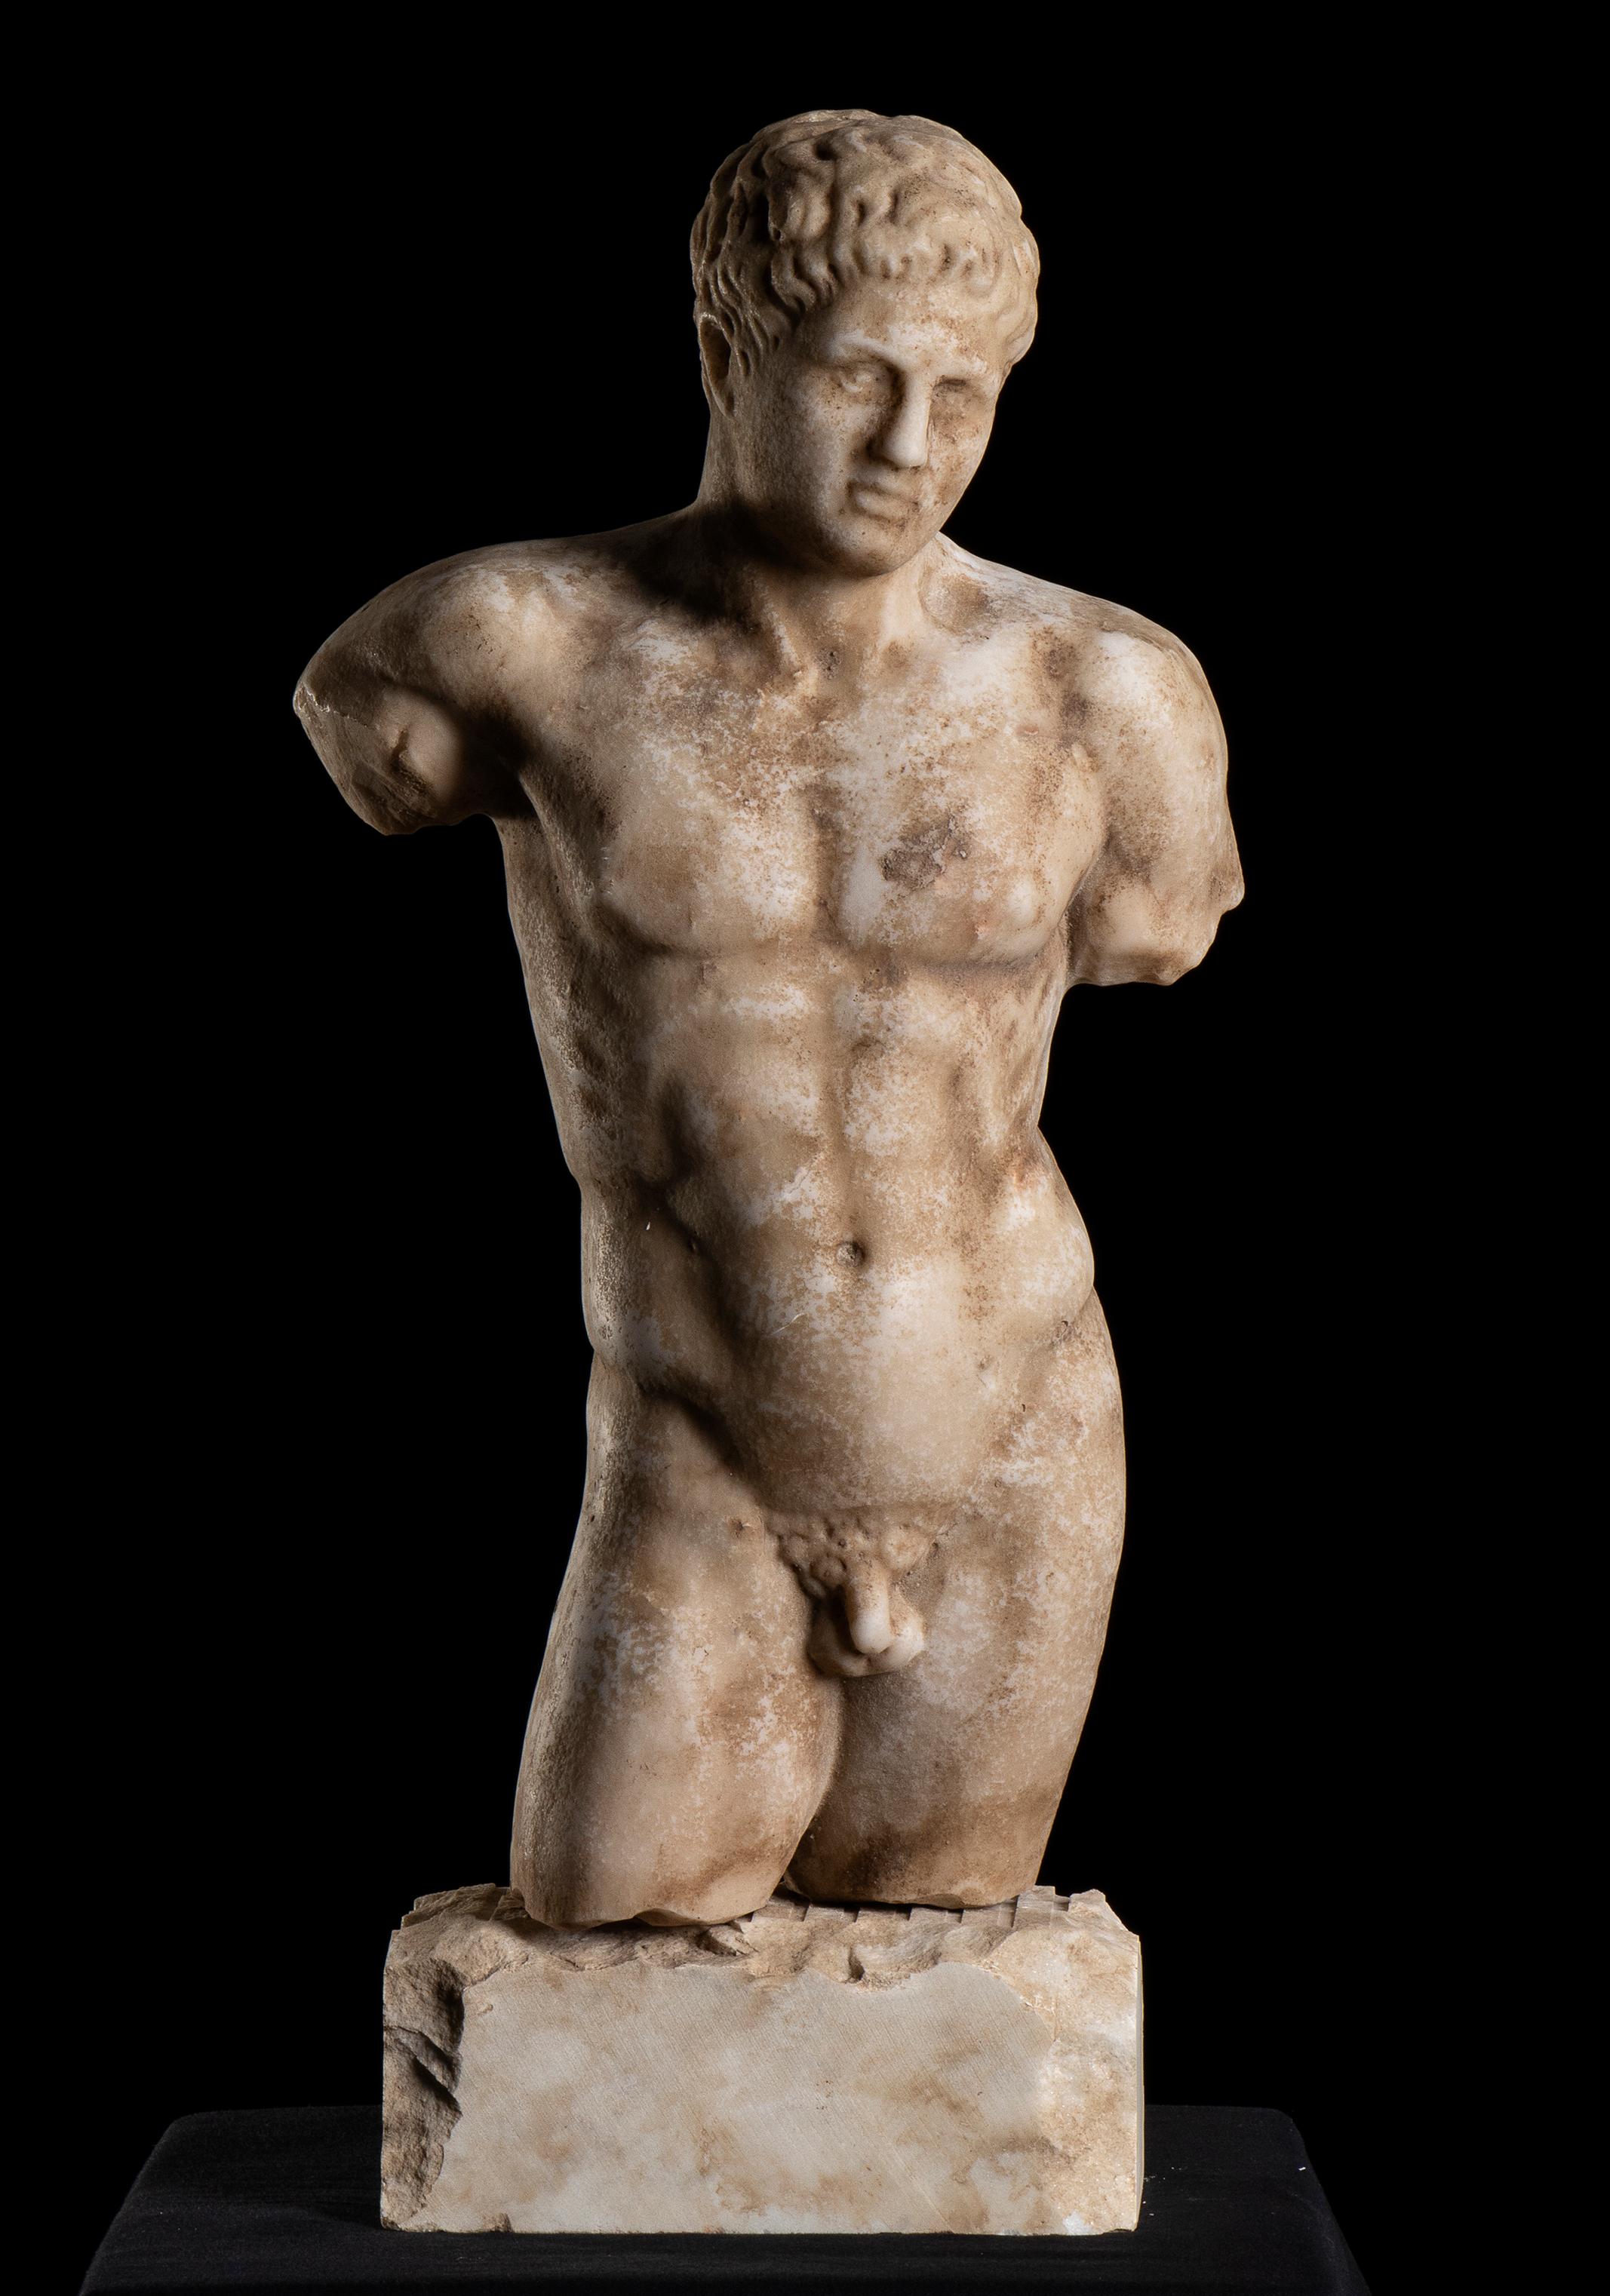 Unknown Nude Sculpture - Torso Sculpture of Doryphoros as a Torso After the Greek Original by Polykleitos